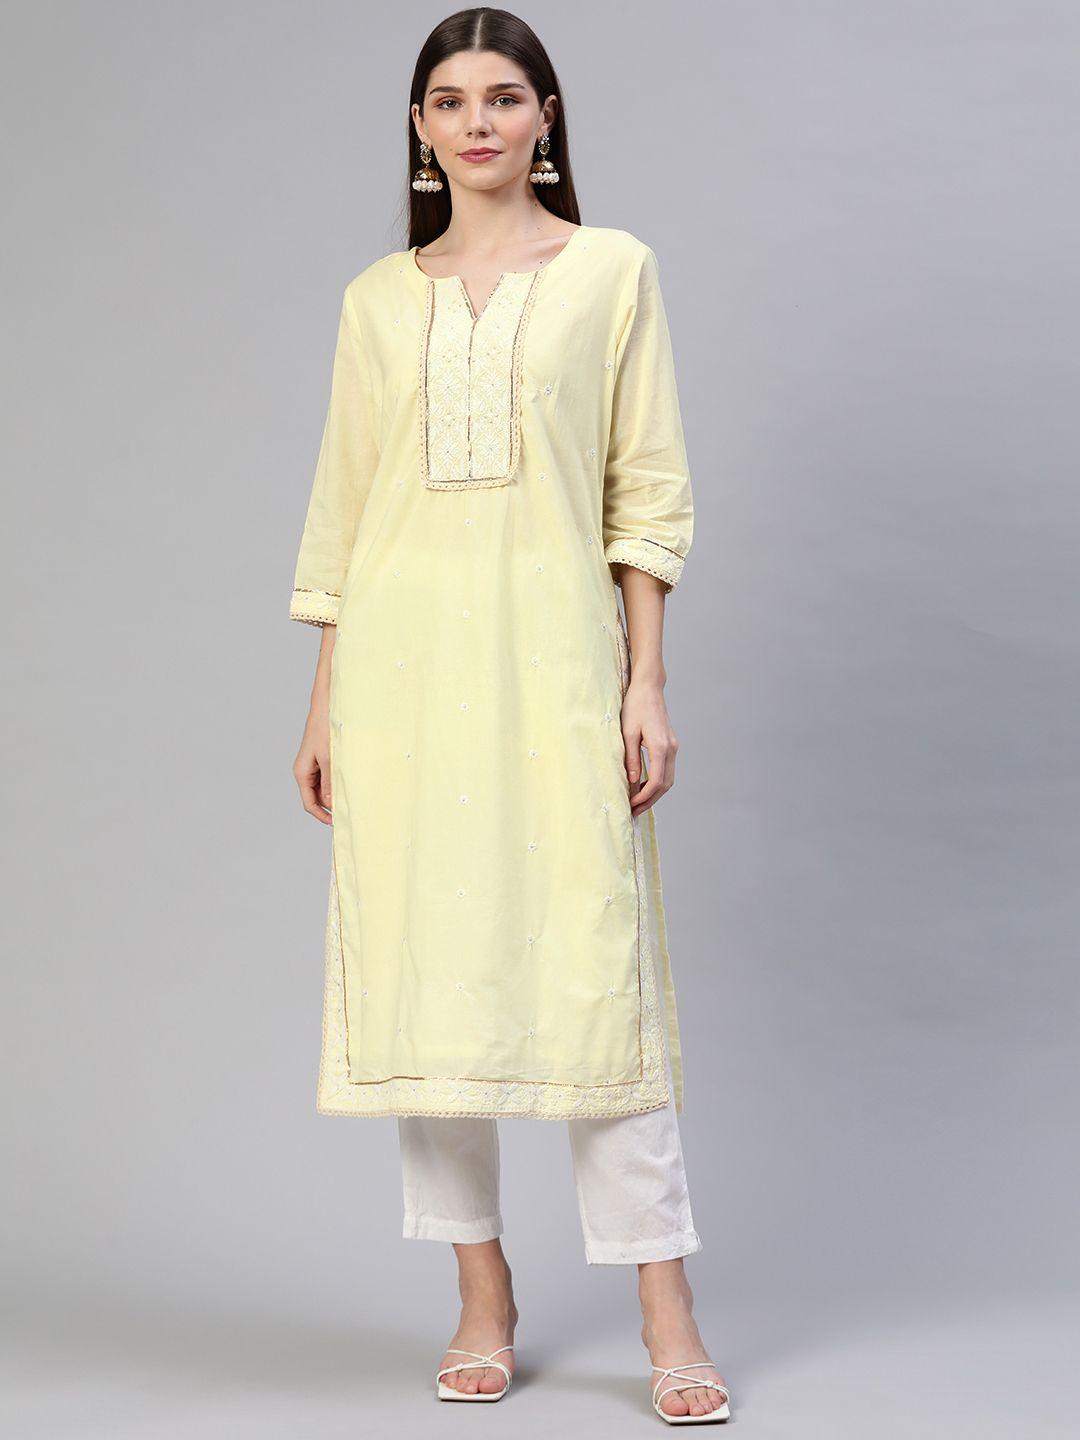 readiprint fashions women yellow embroidered thread work kurta